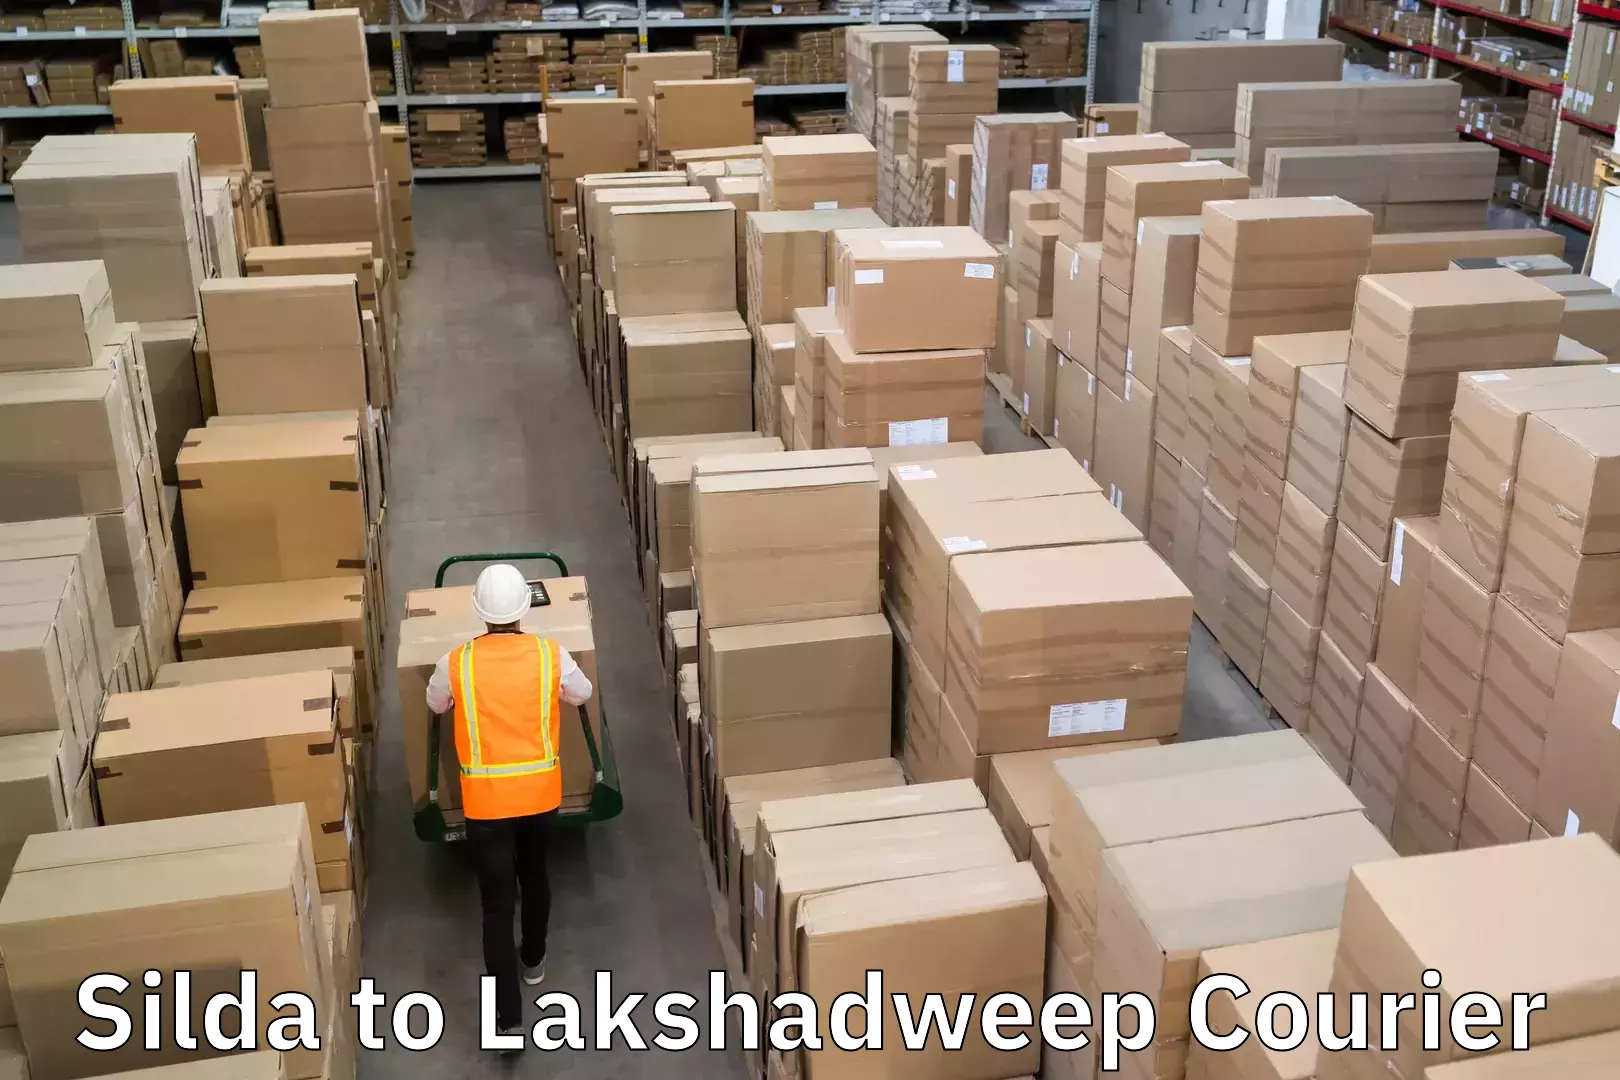 Expedited shipping methods Silda to Lakshadweep